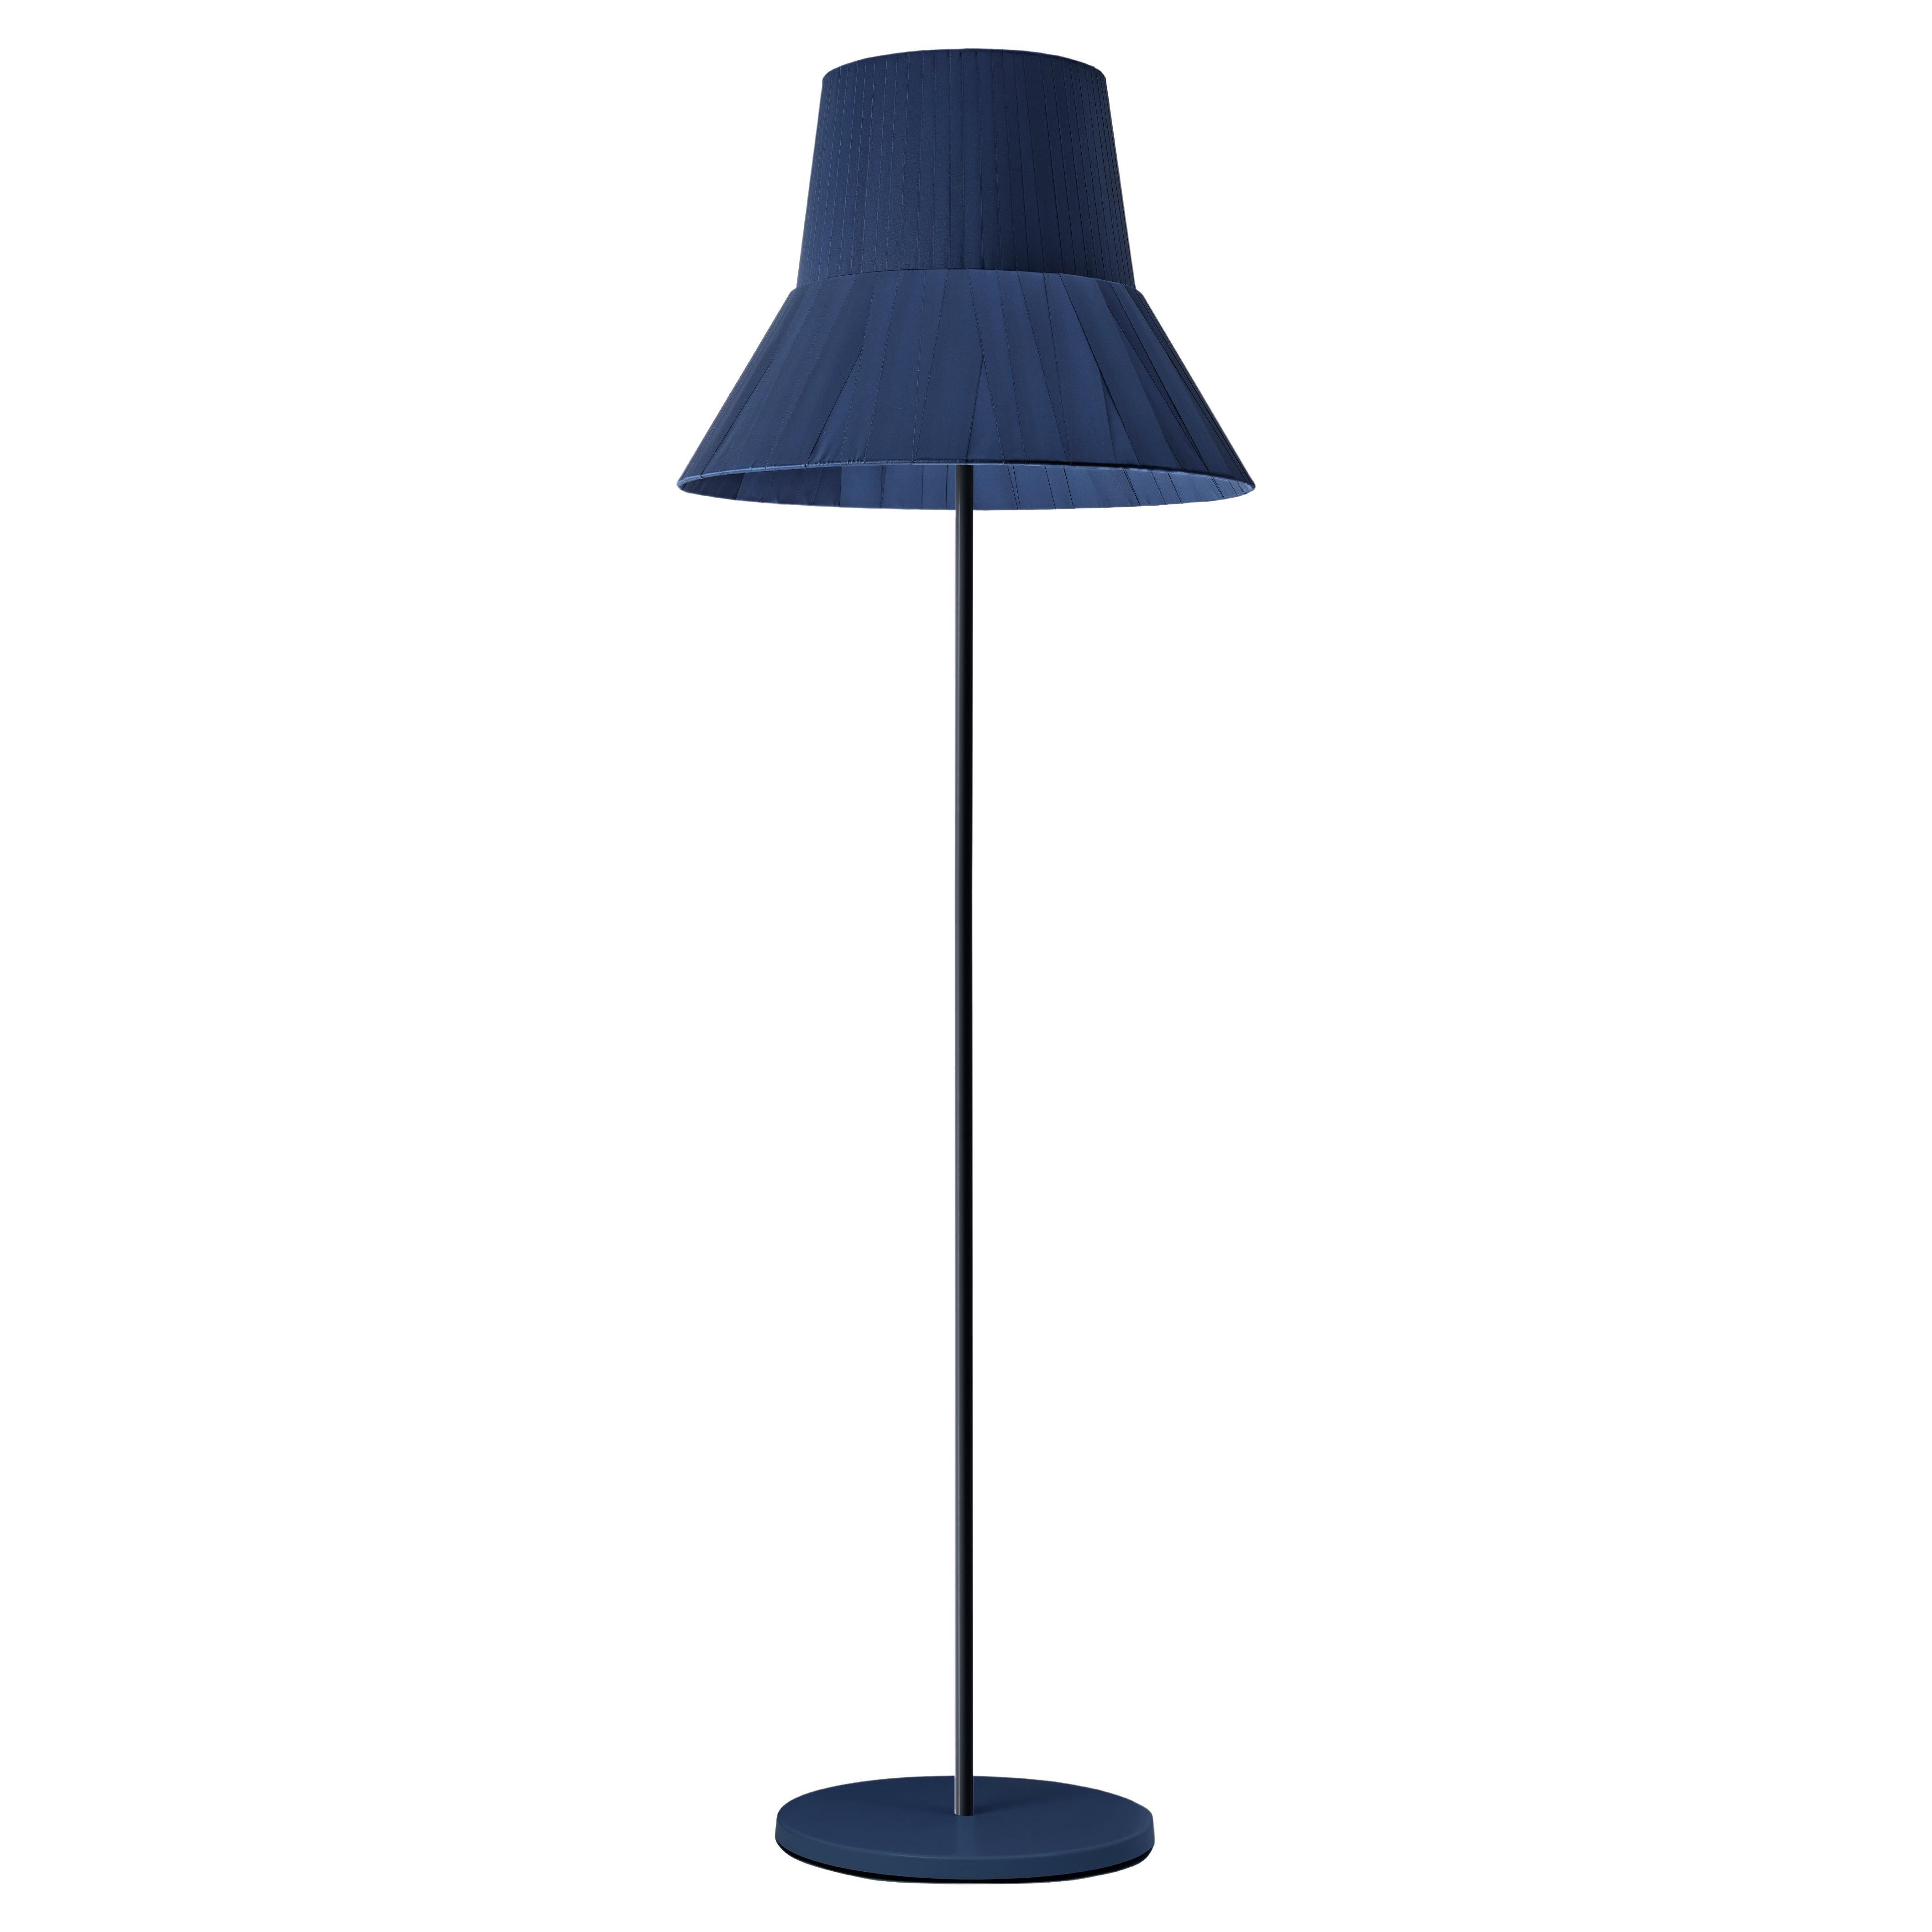 Contemporary Floor Lamp "Audrey" Navy Blue by Studio Catoir